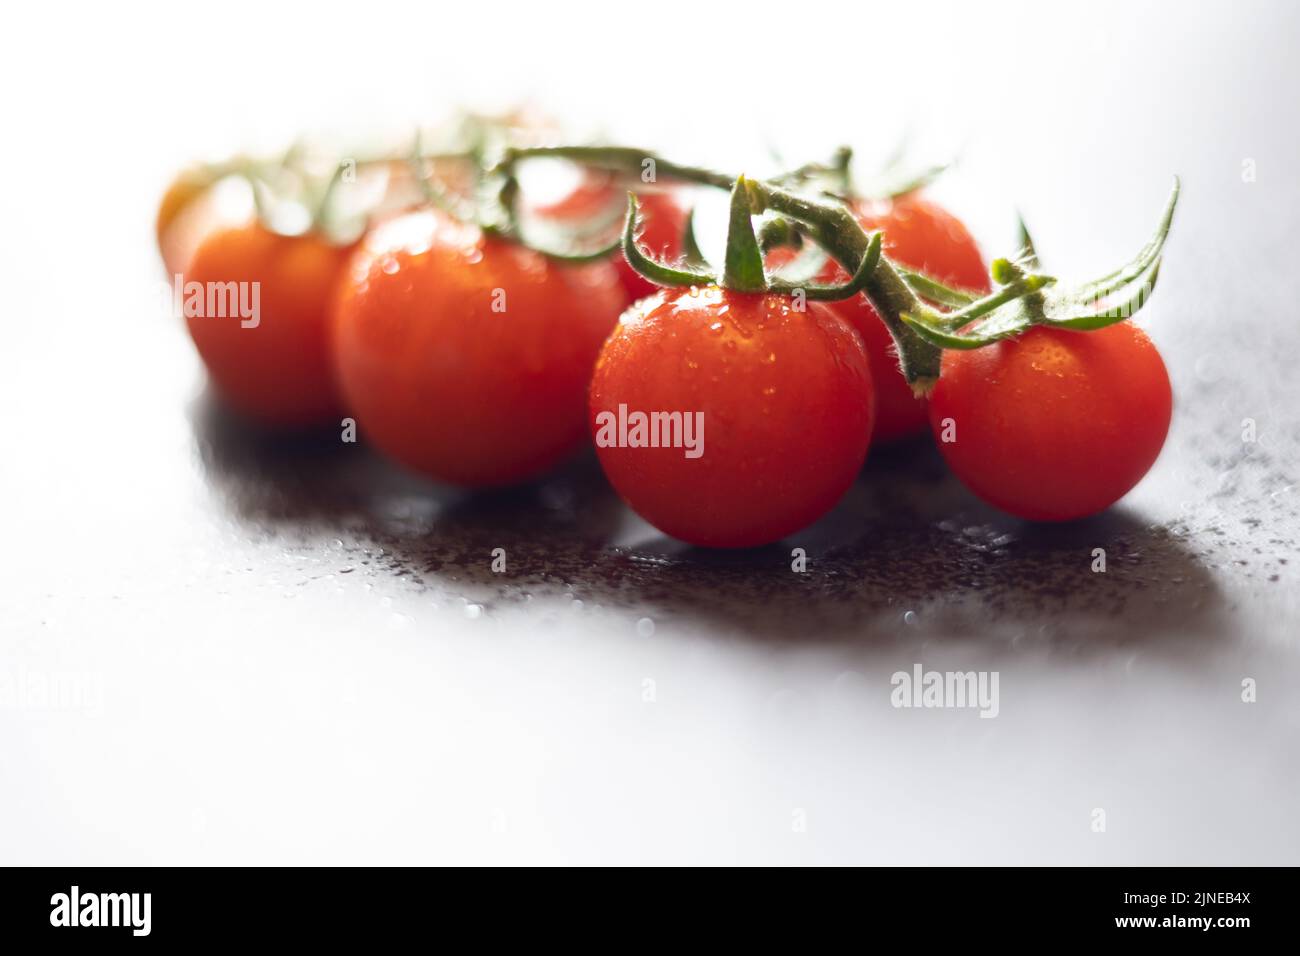 Red tomato fruits Solanum lycopersicum- (red cherry) on white background. Stock Photo